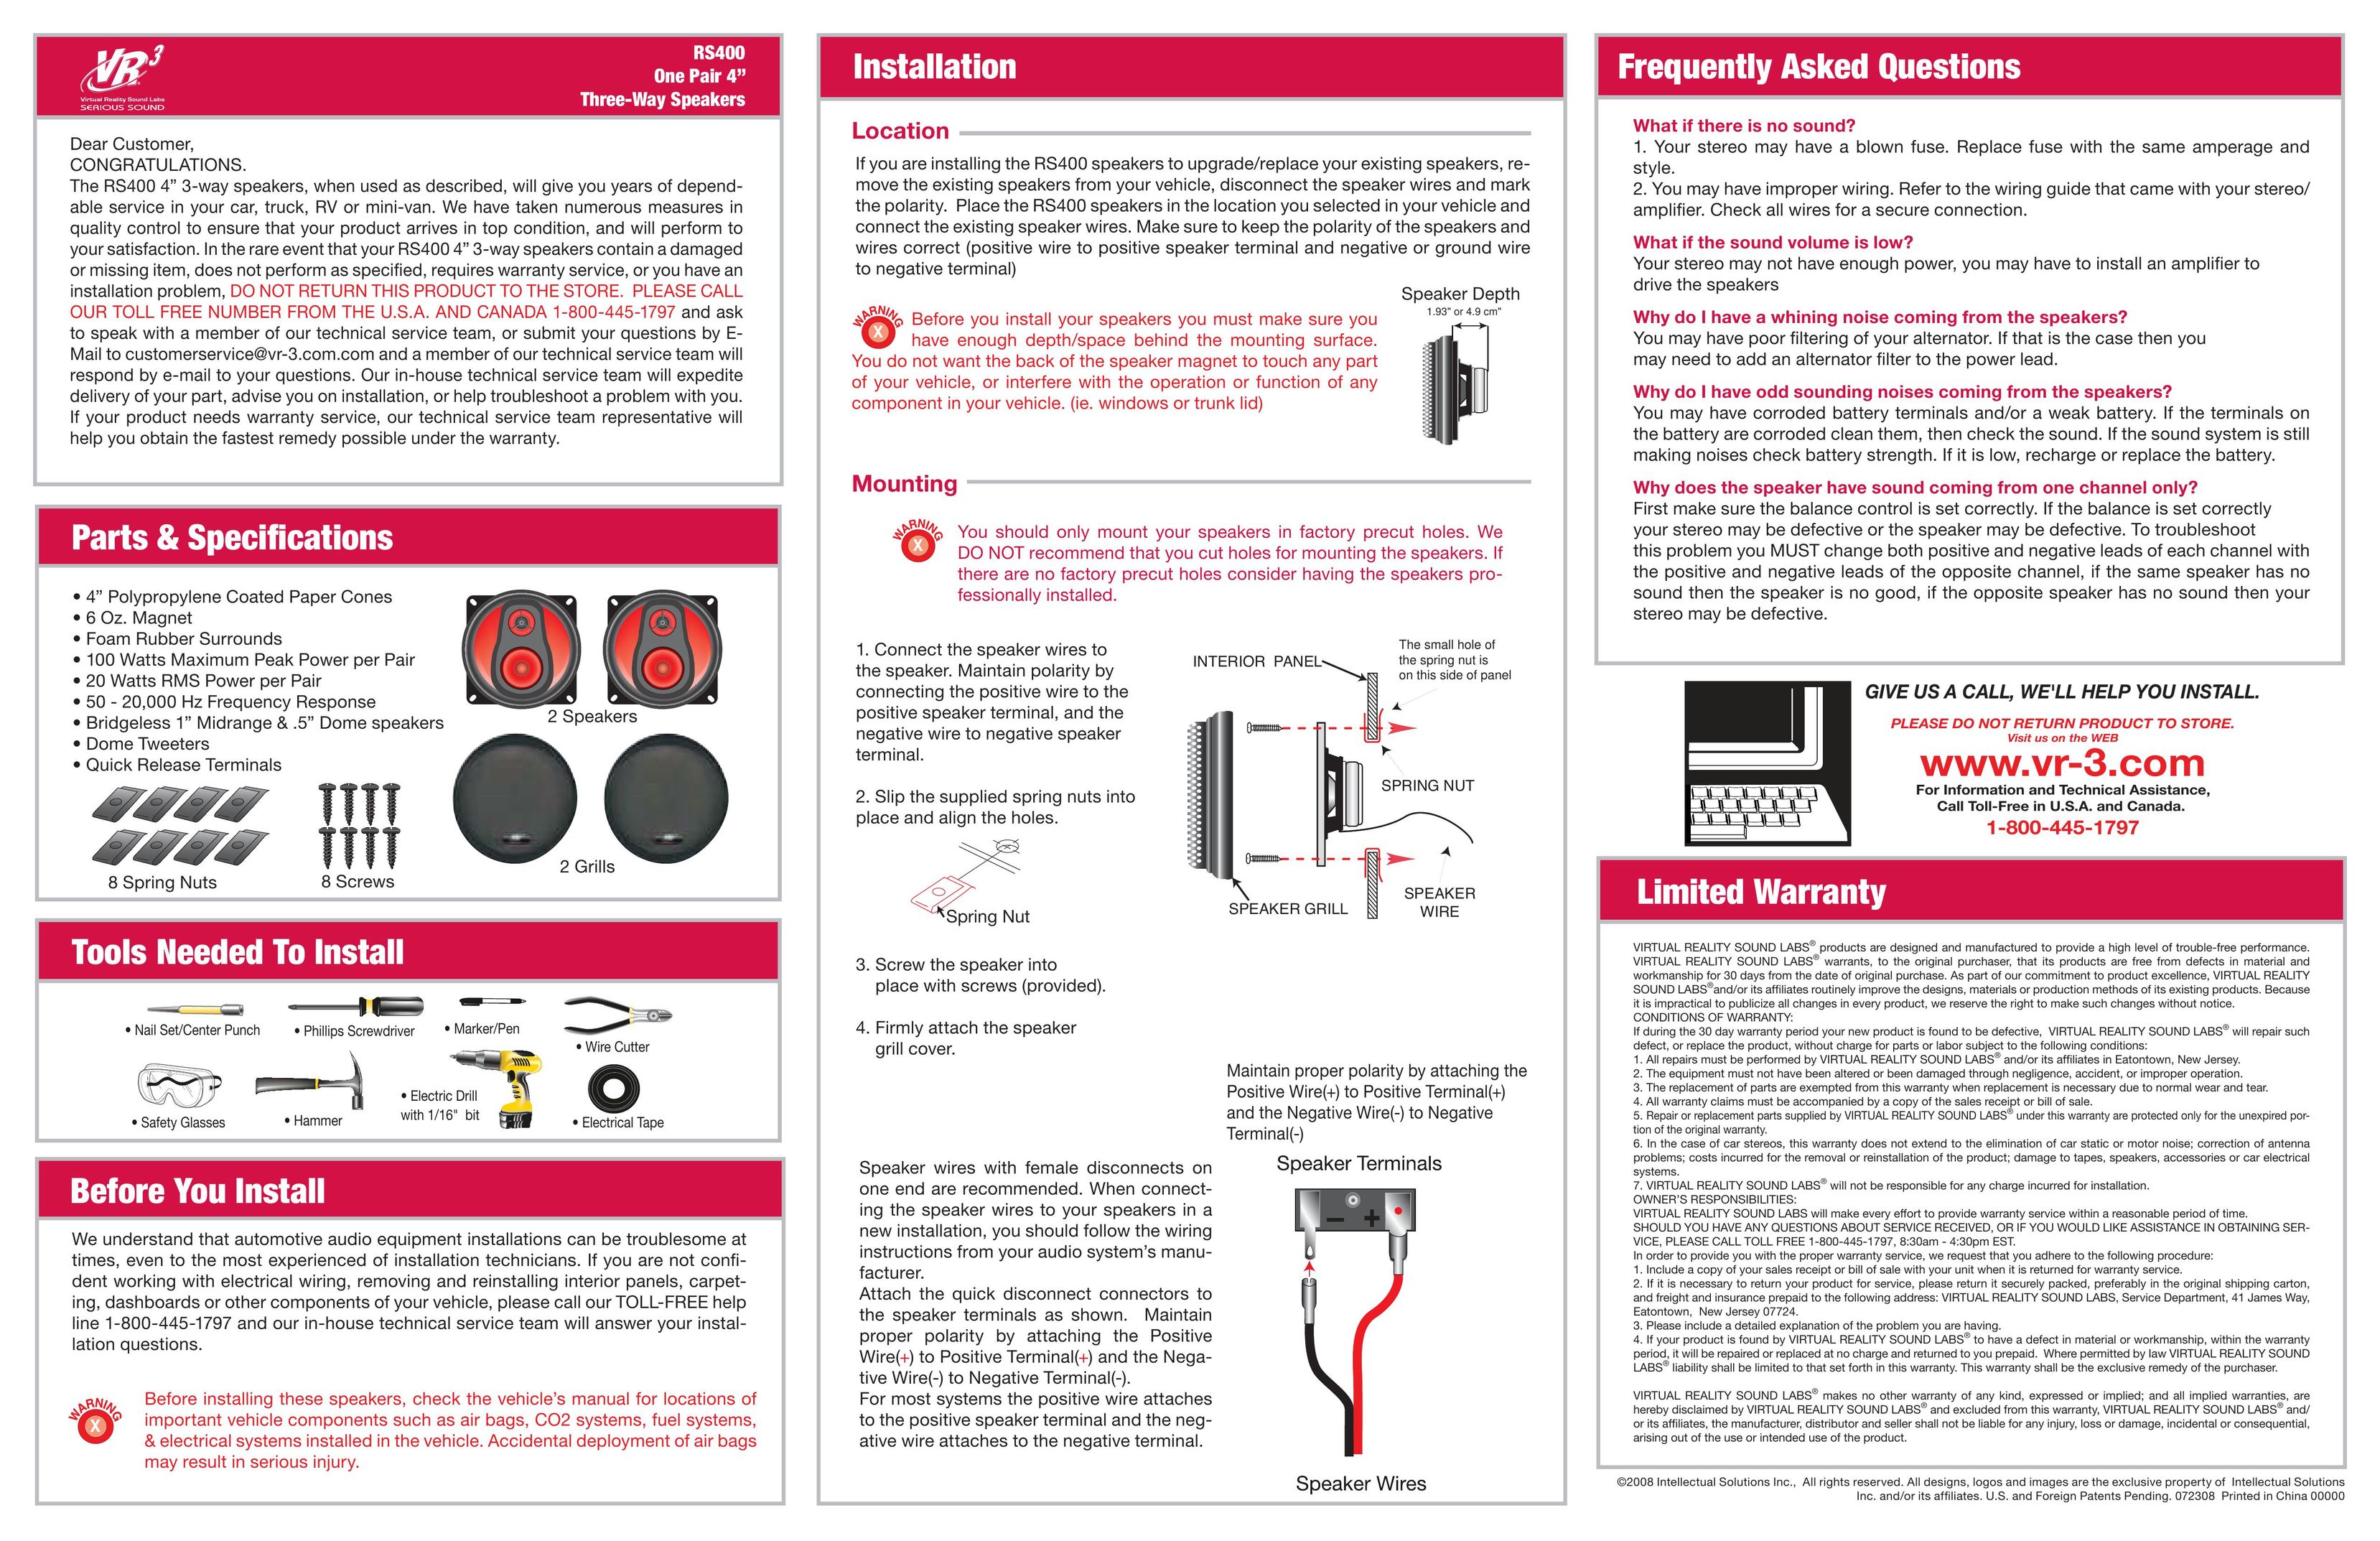 Roadmaster RS 400 Speaker User Manual